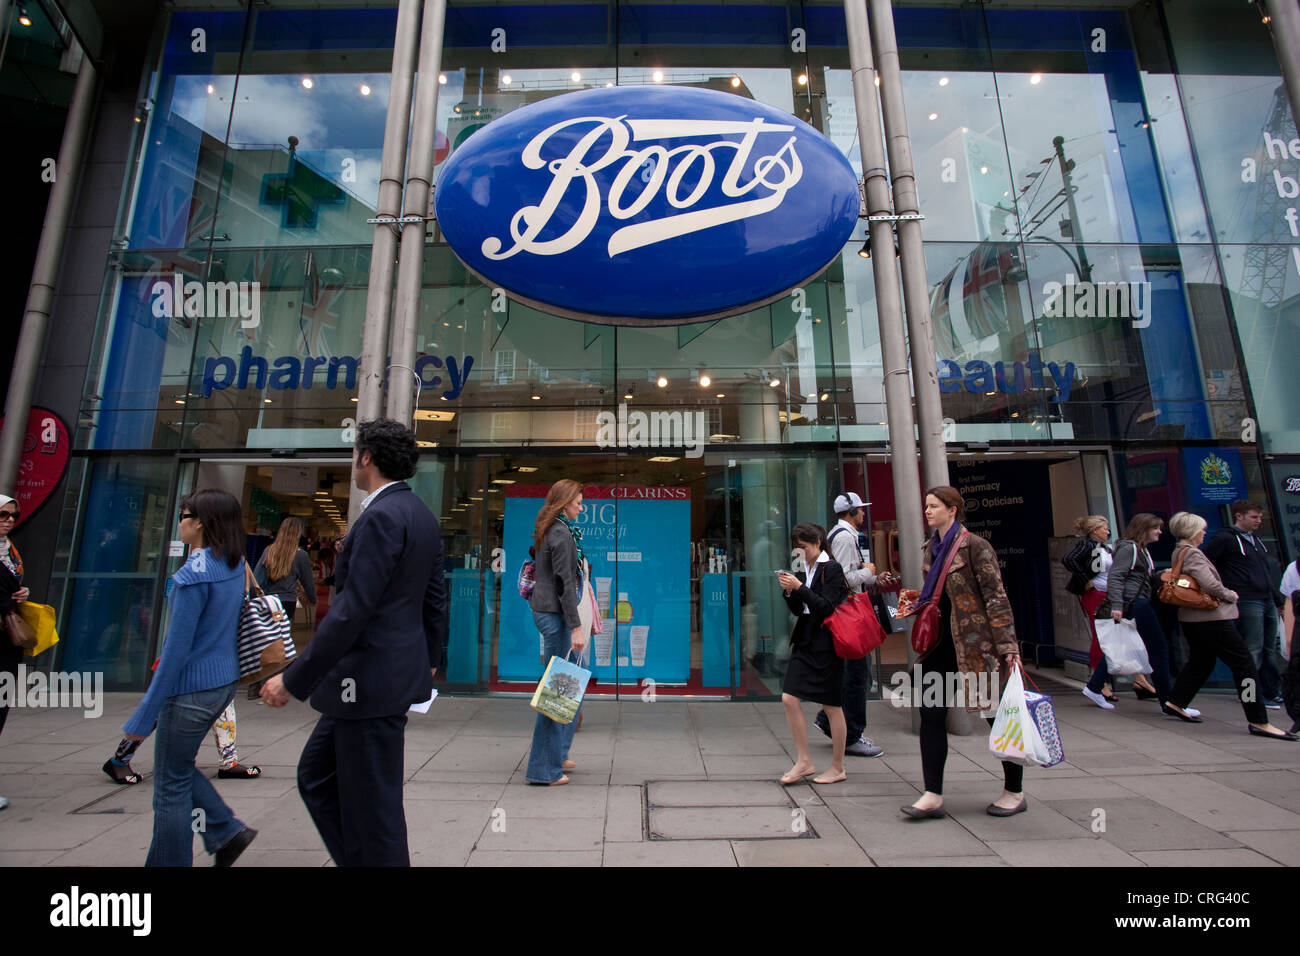 Boots pharmacy, Oxford Street, London, United Kingdom Stock Photo - Alamy